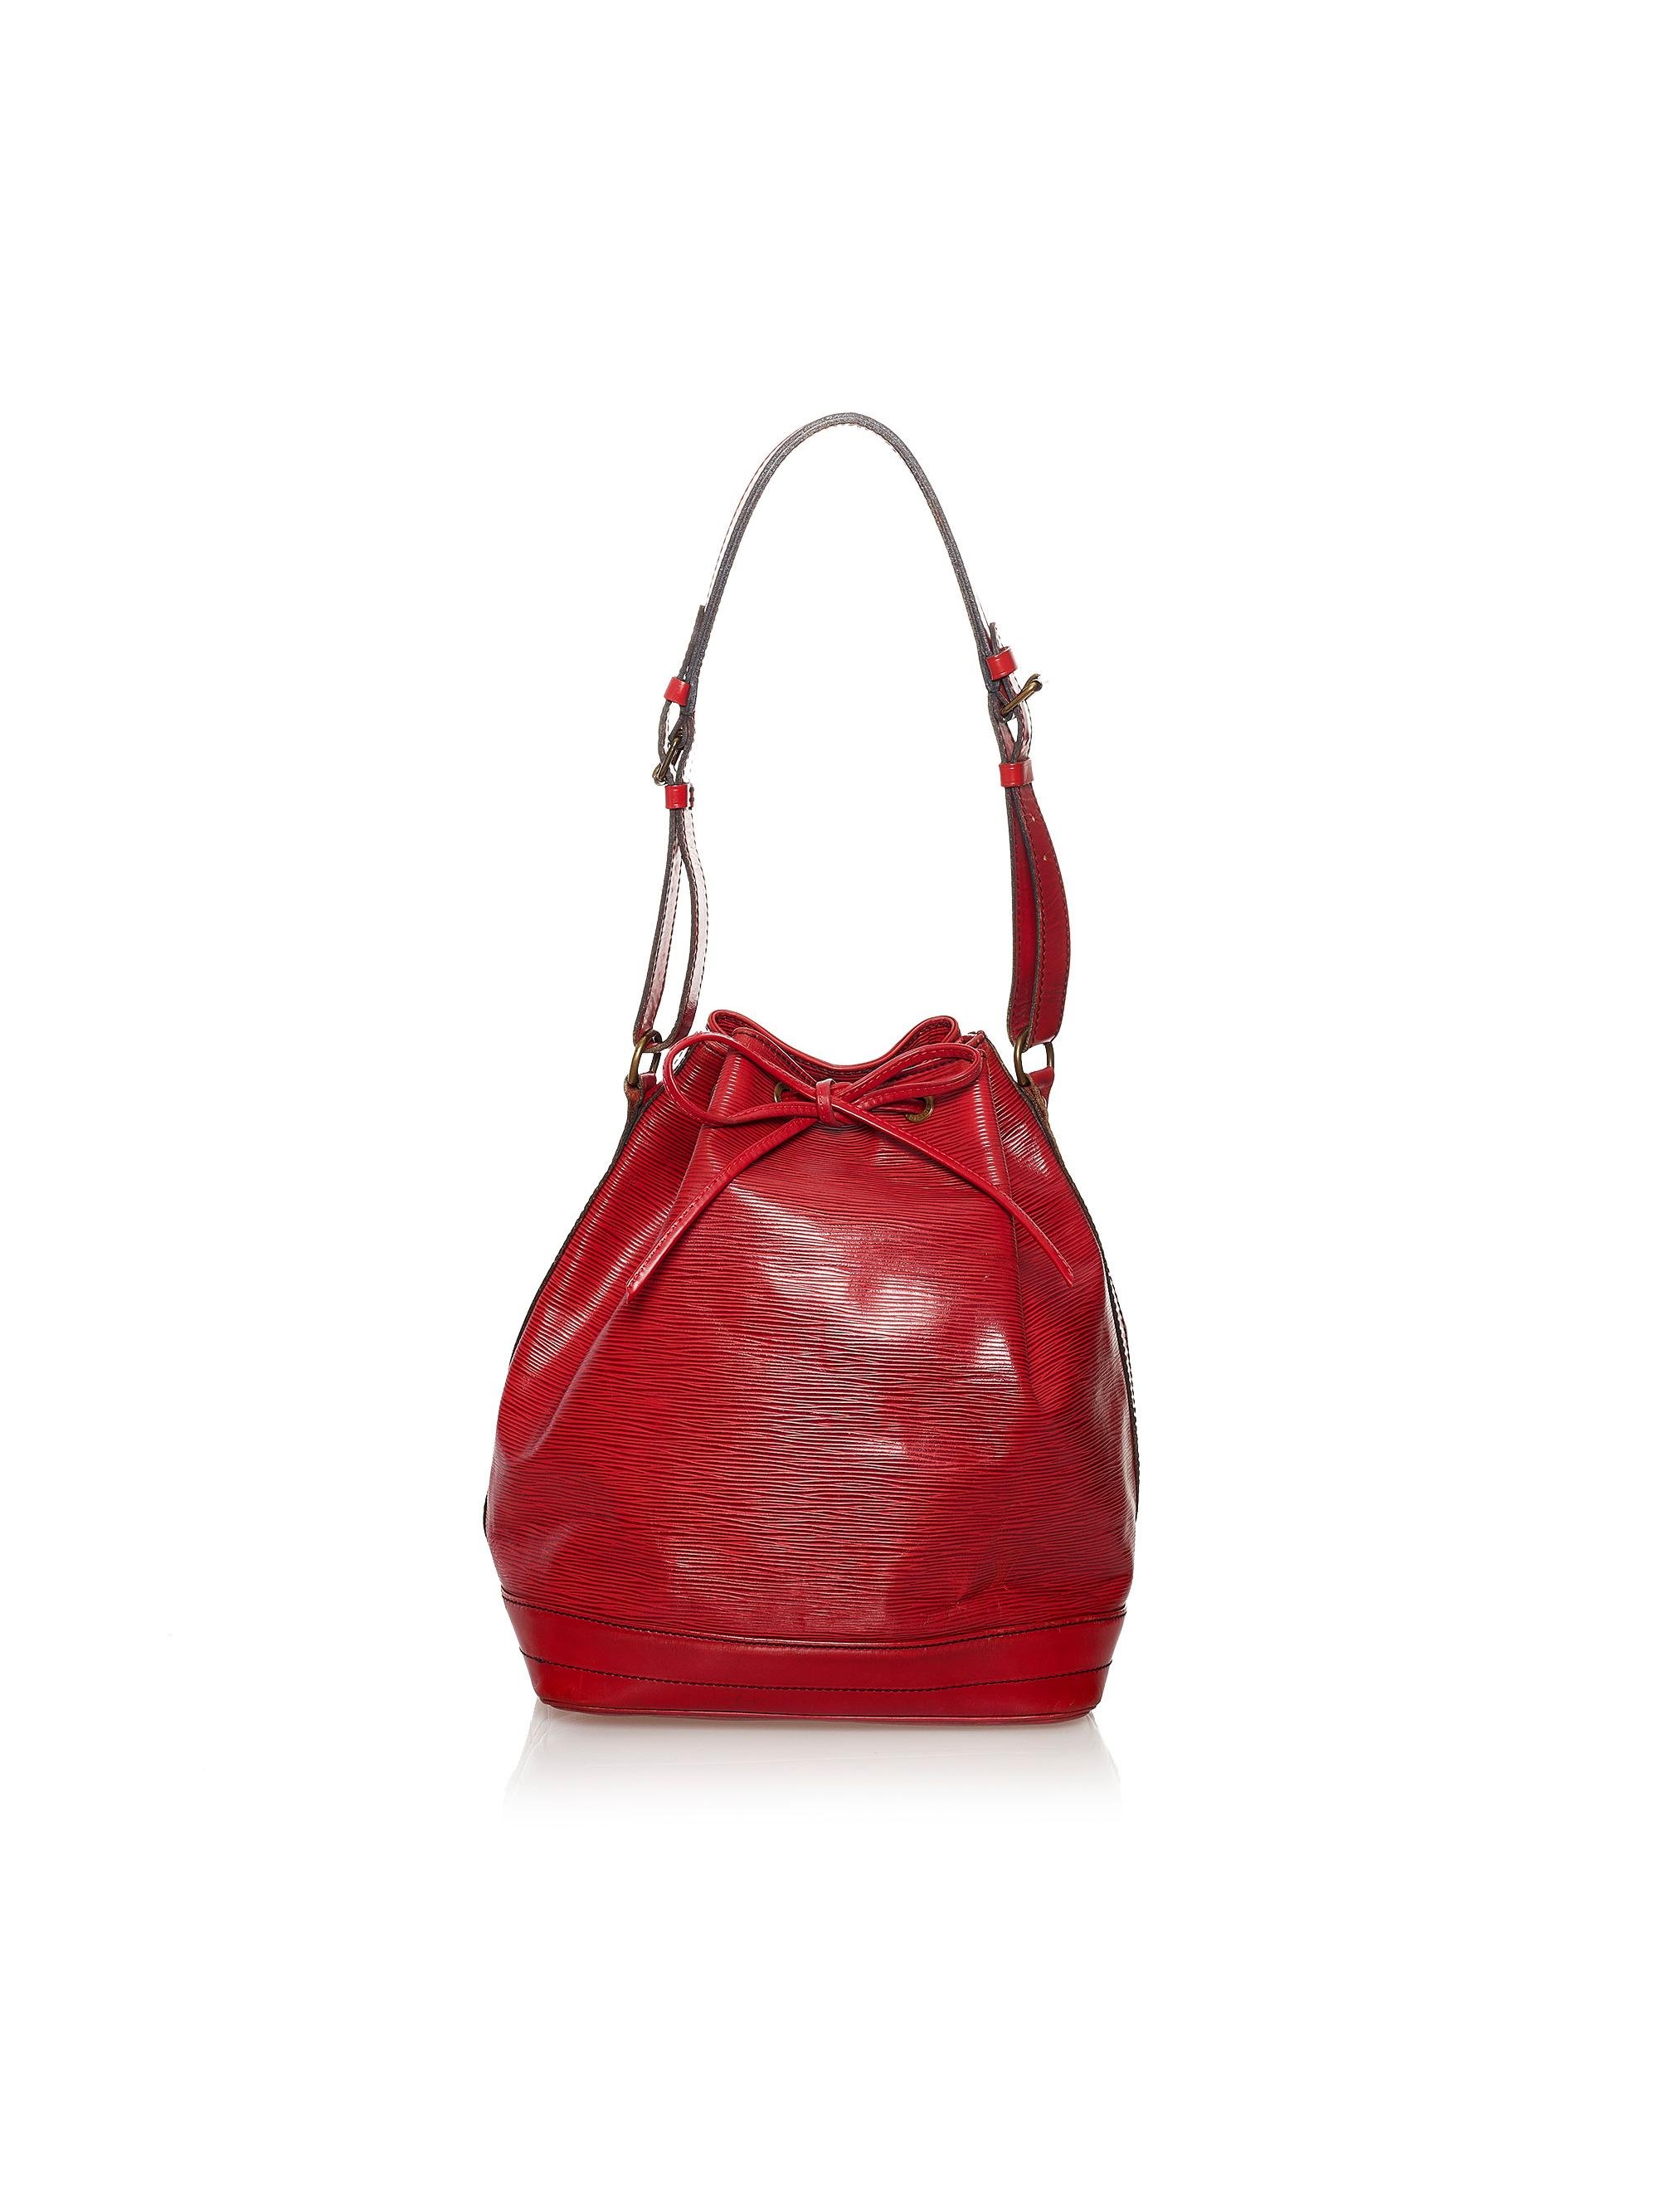 Bottega Veneta Intrecciato Leather Tote Bag Red Pony-style